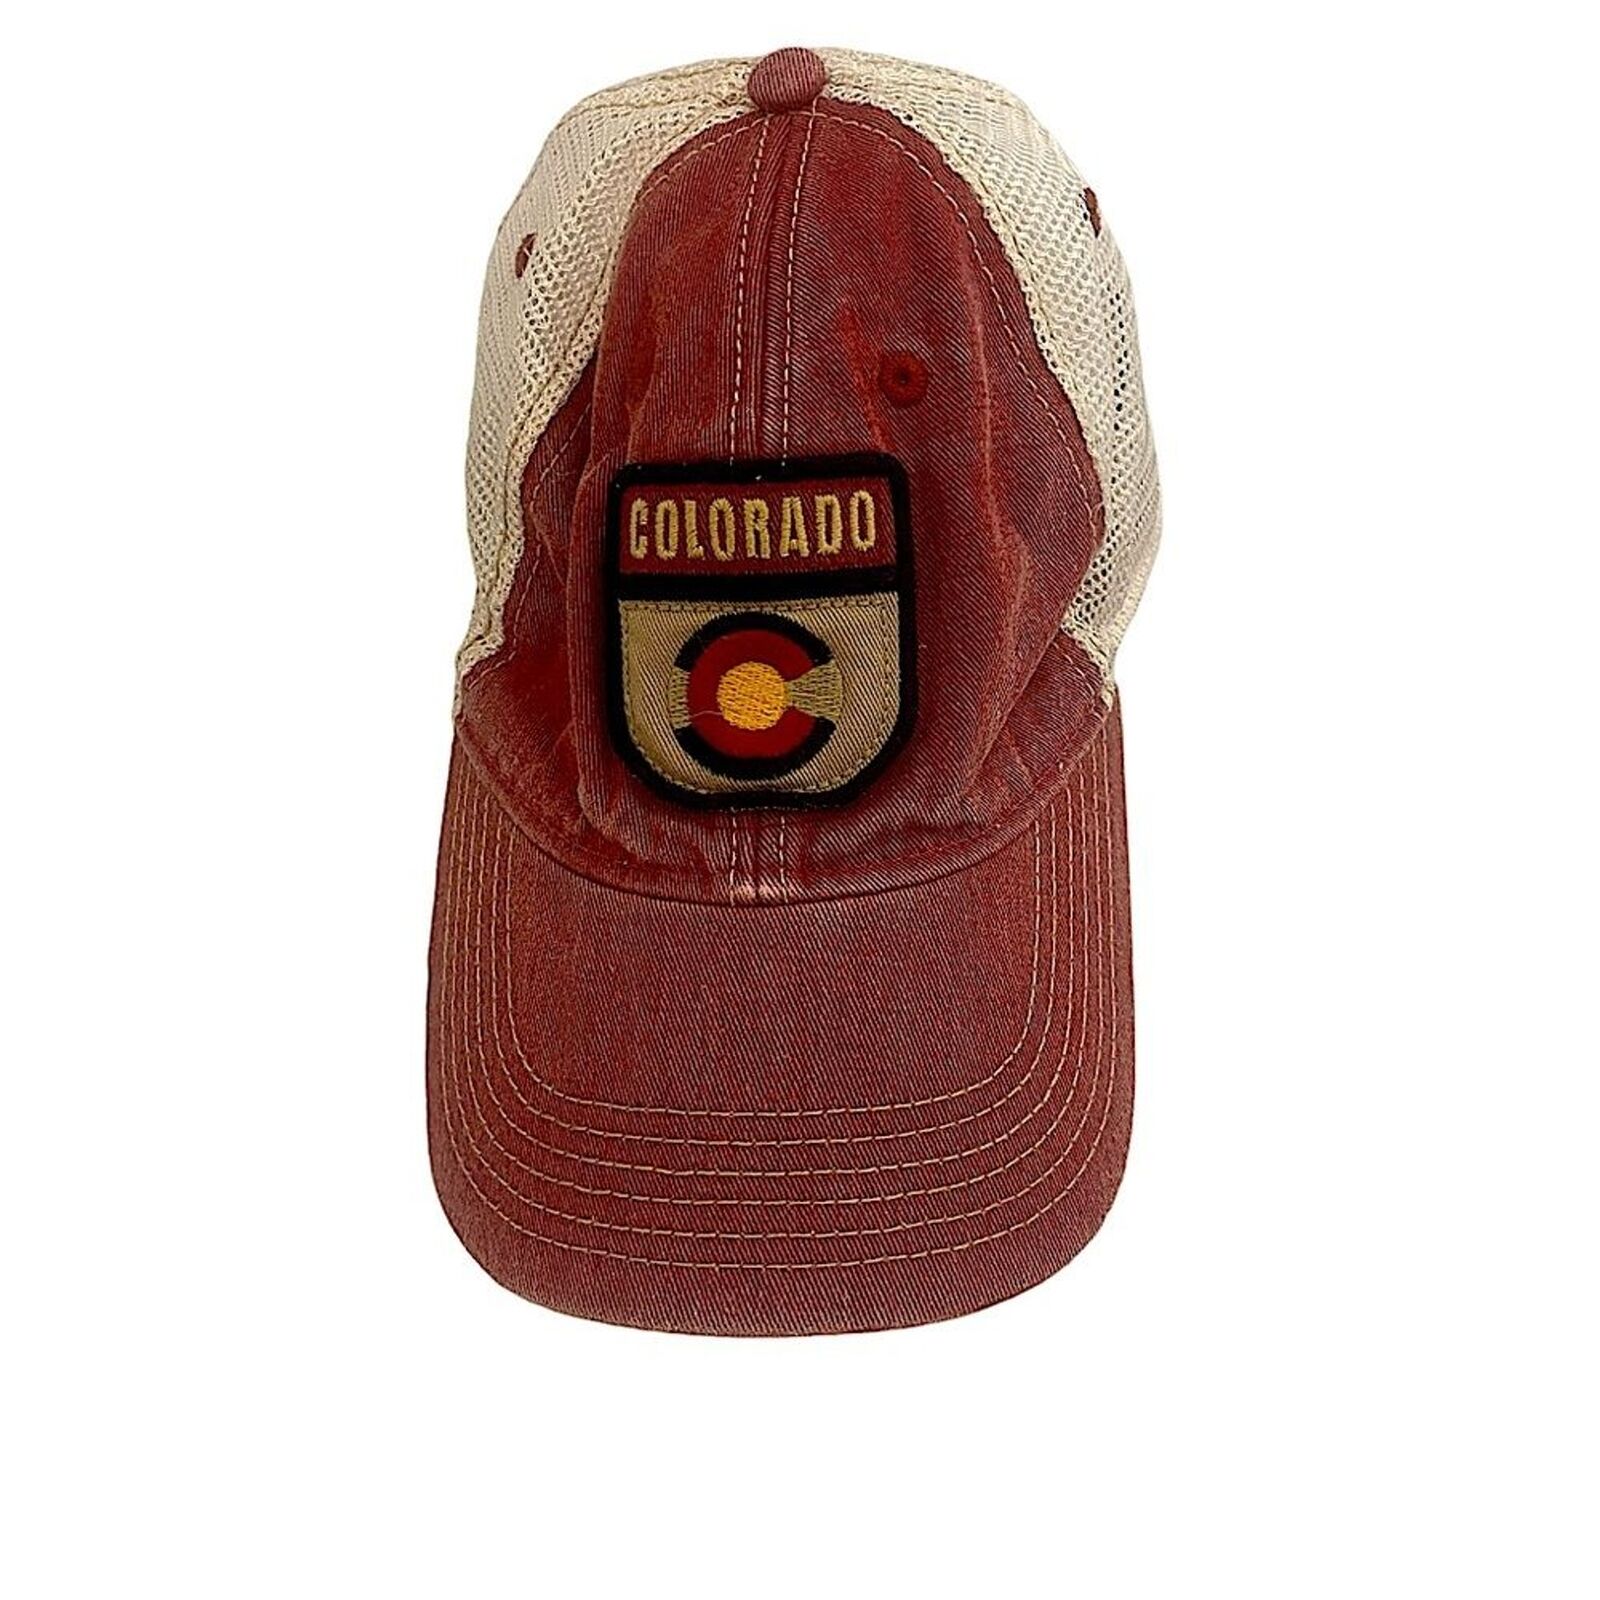 Legacy Colorado Red Baseball Hat - image 1